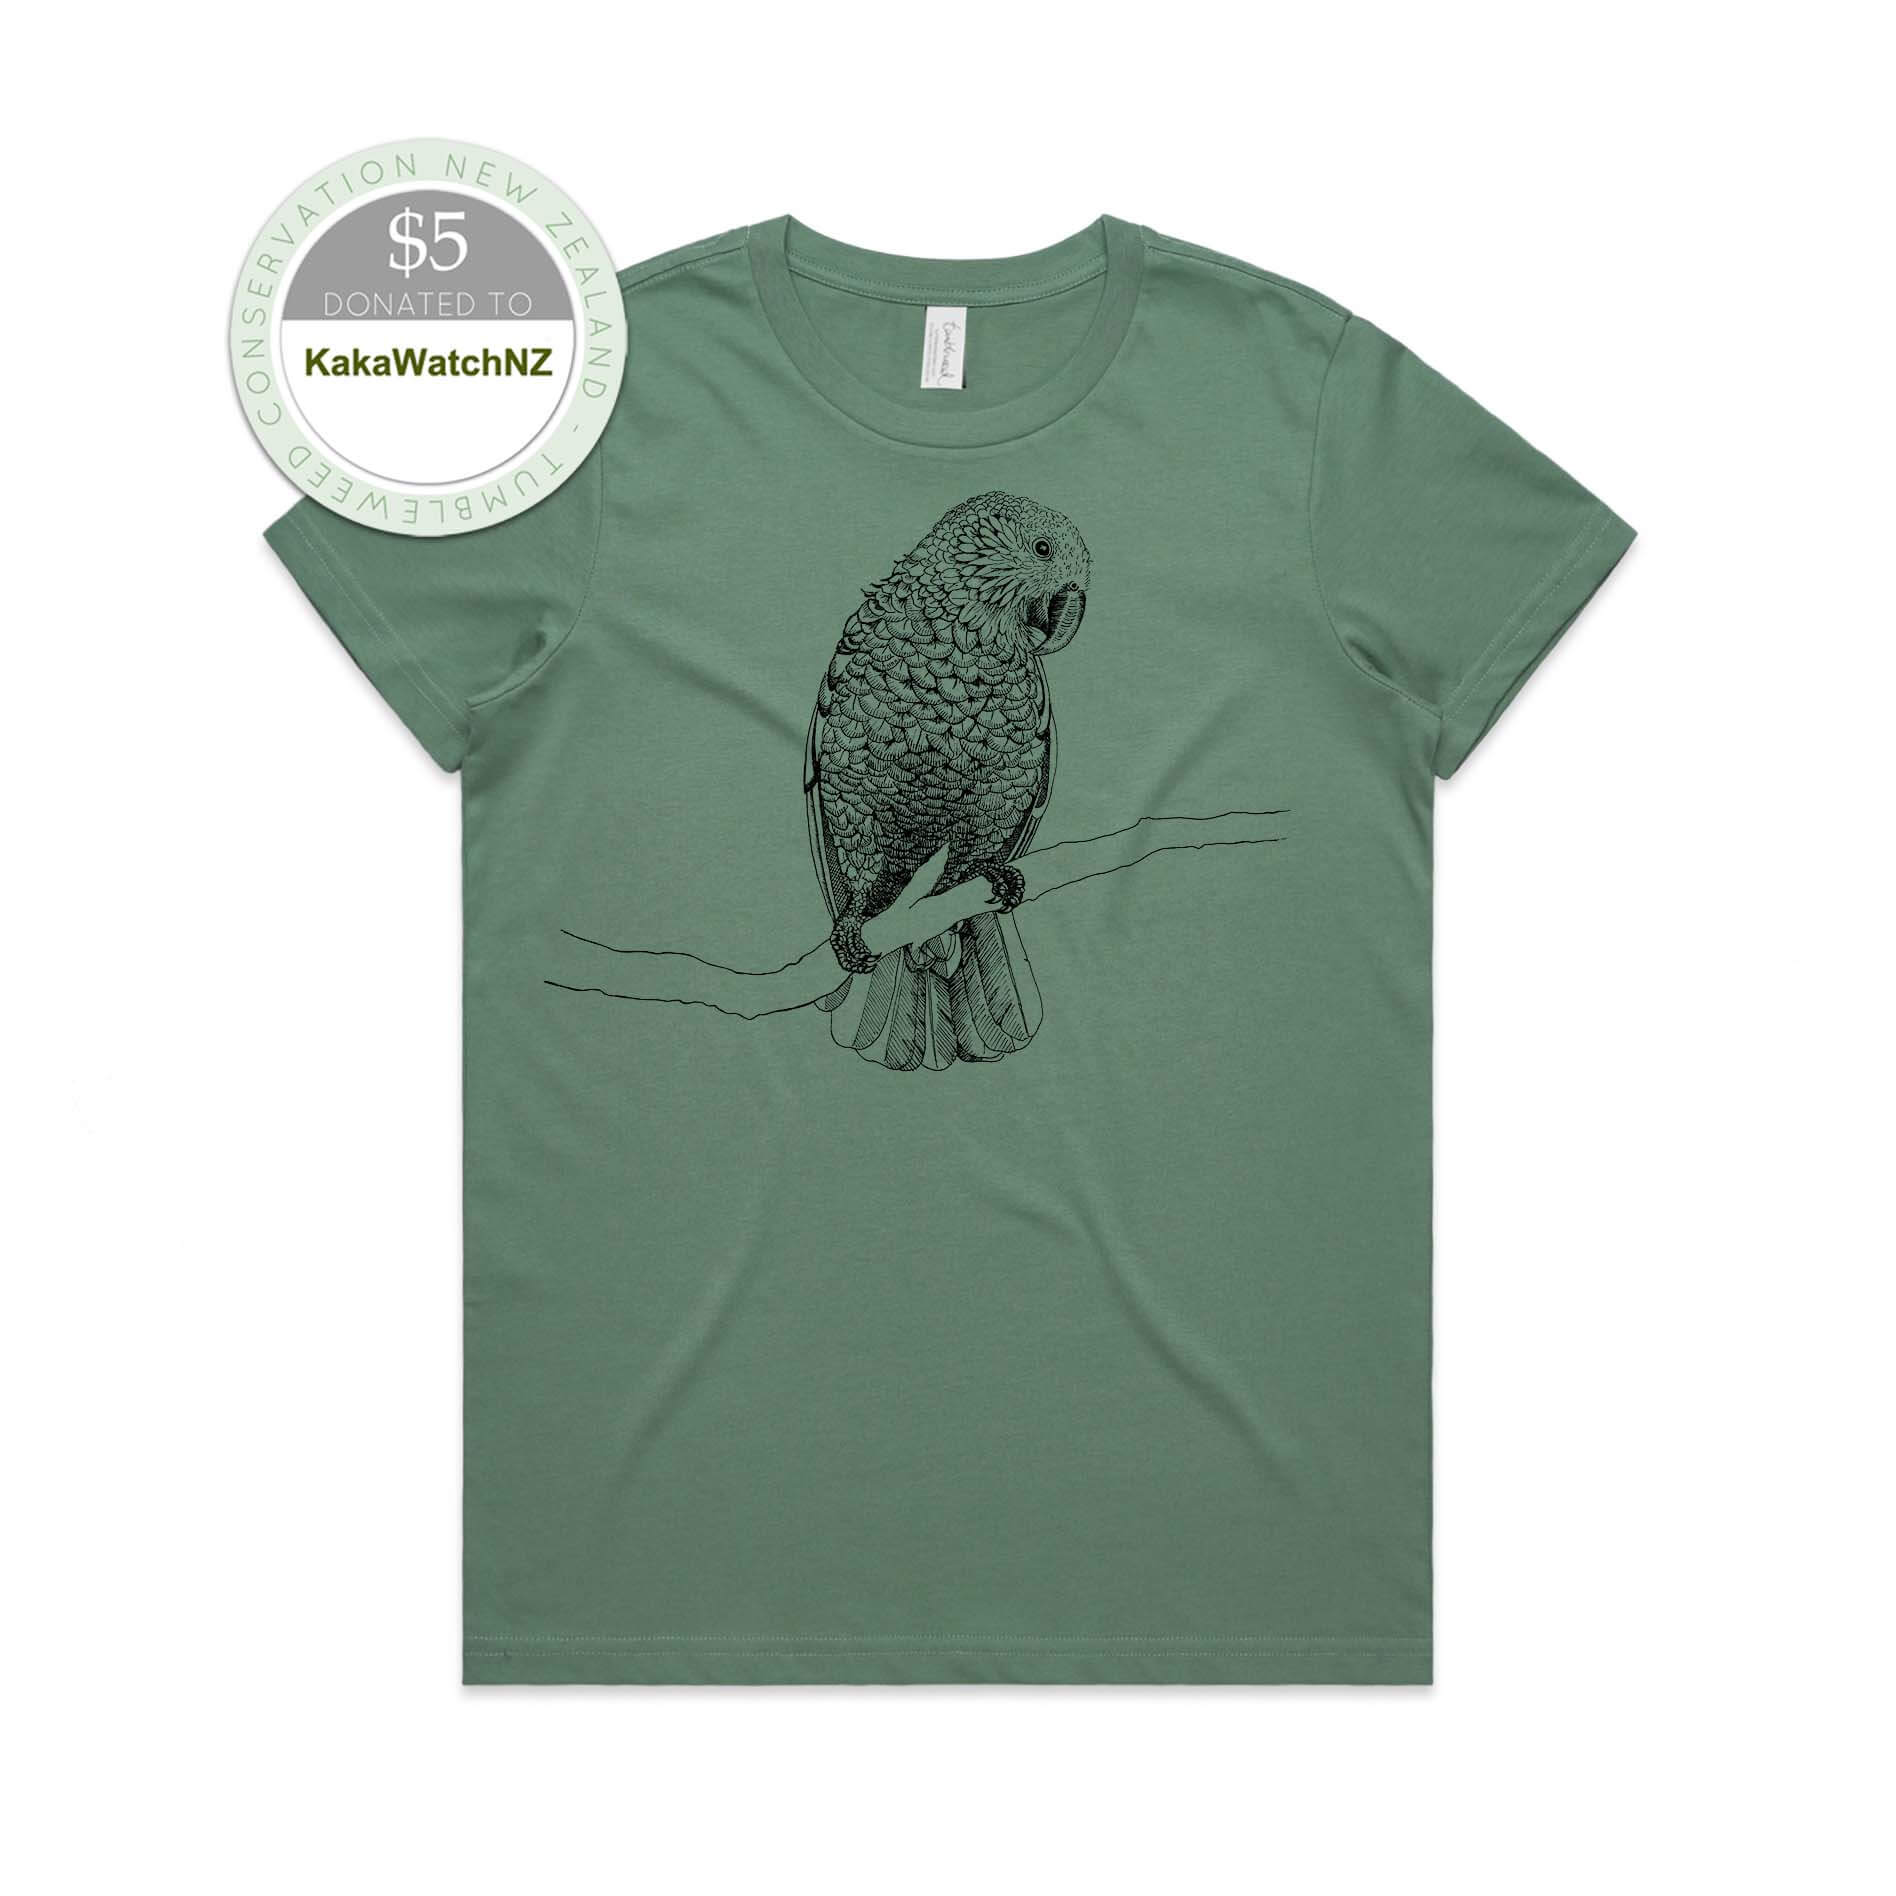 Sage, female t-shirt featuring a screen printed Kaka design.